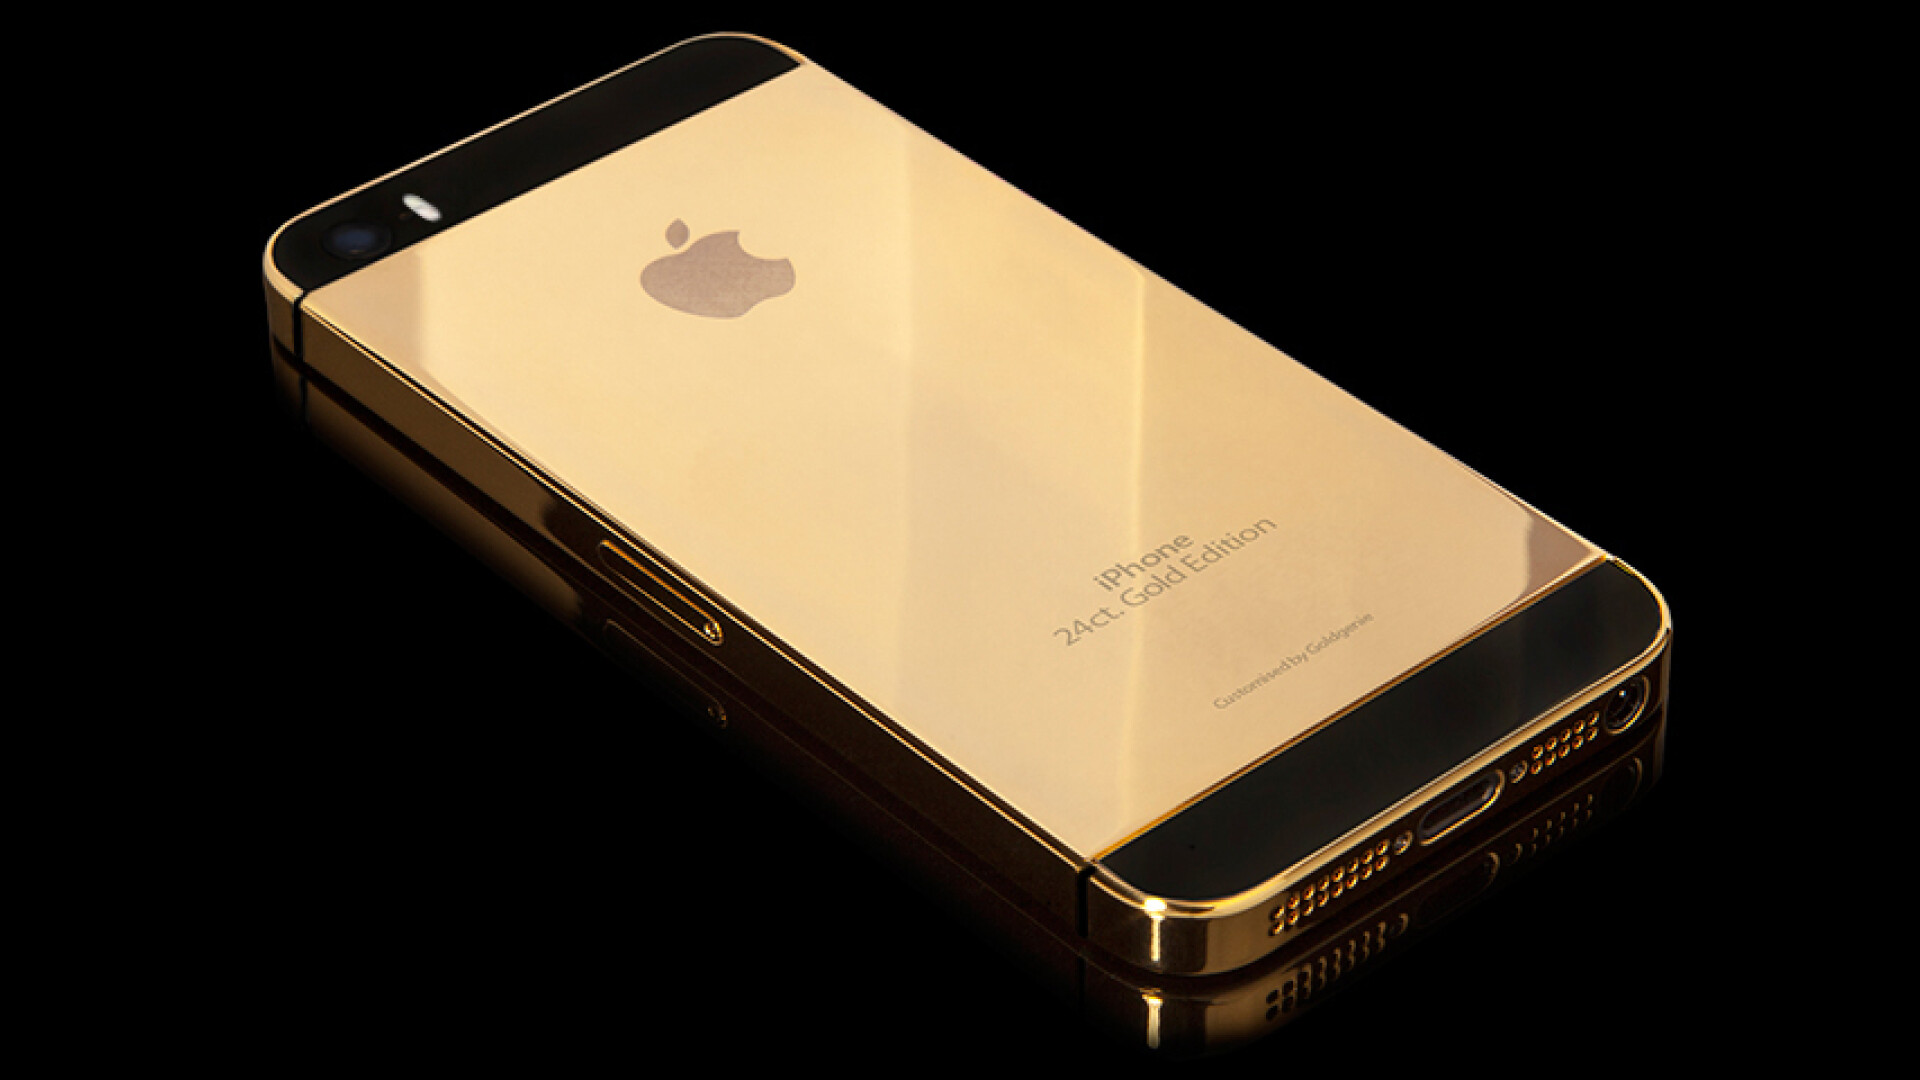 iphone 5s aur - 7